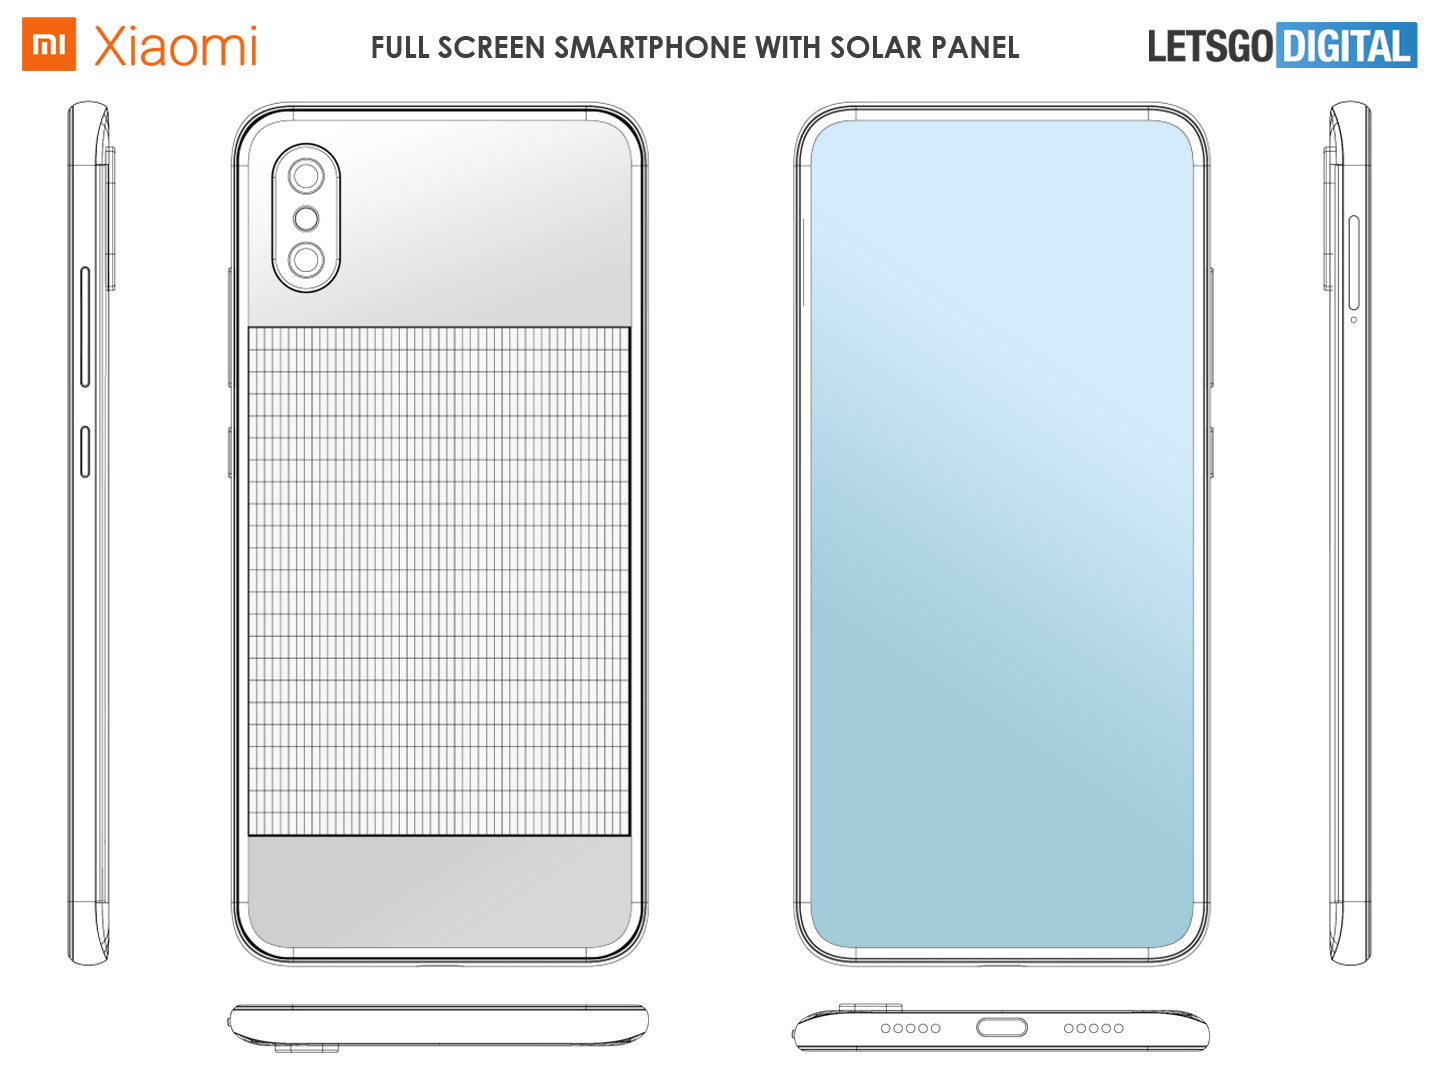 Xiaomi solar powered smartphone